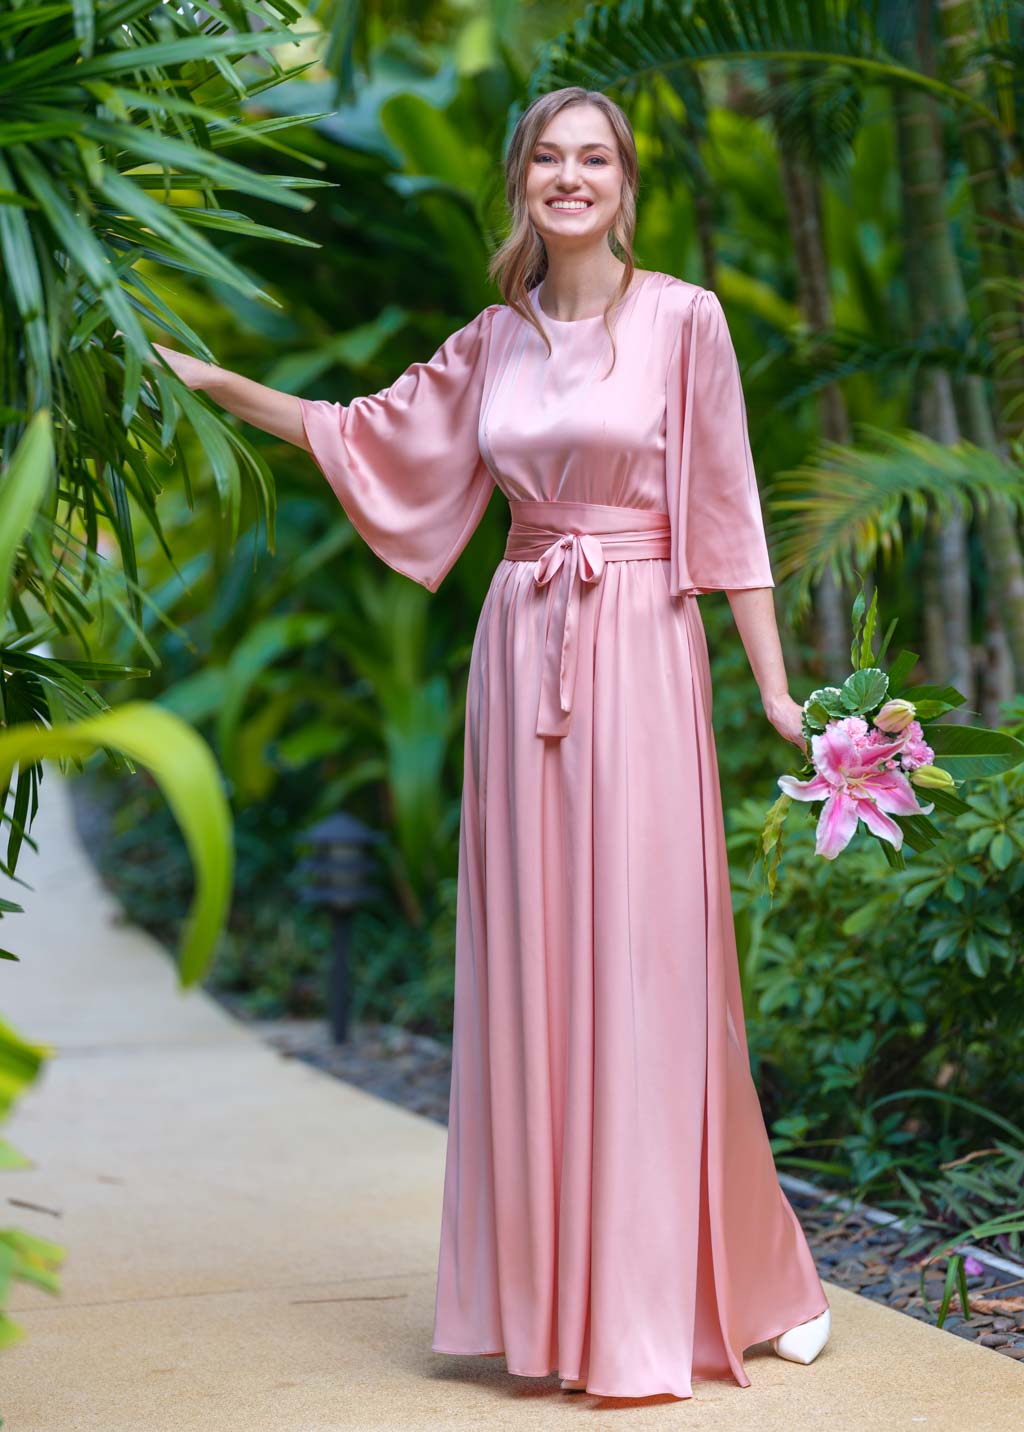 Blush pink silk dress with belt